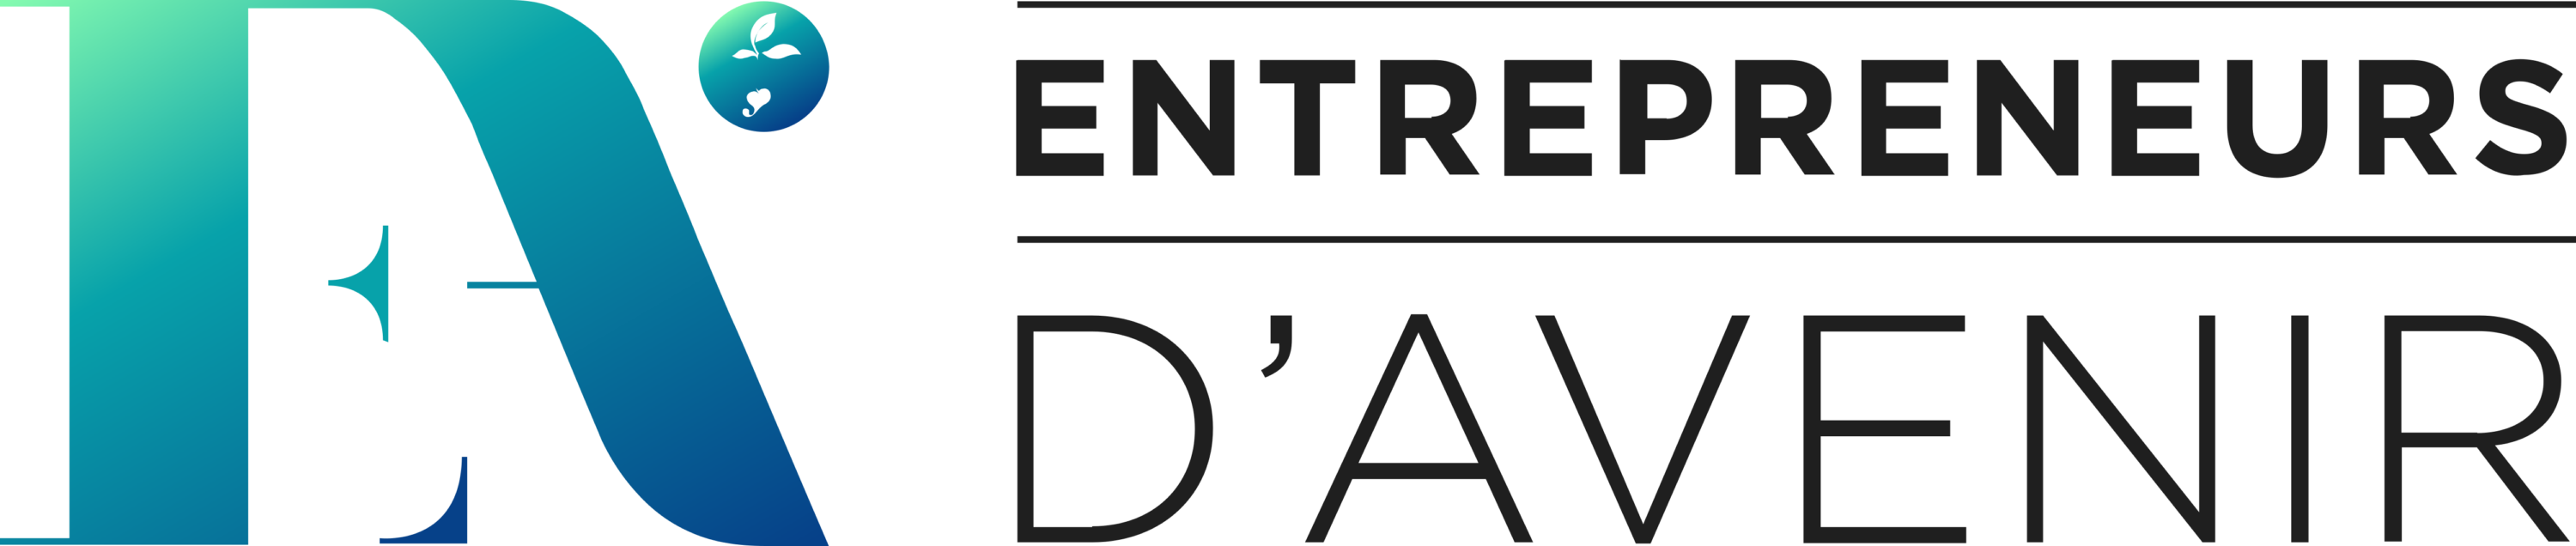 Entrepreneurs Davenir Logo